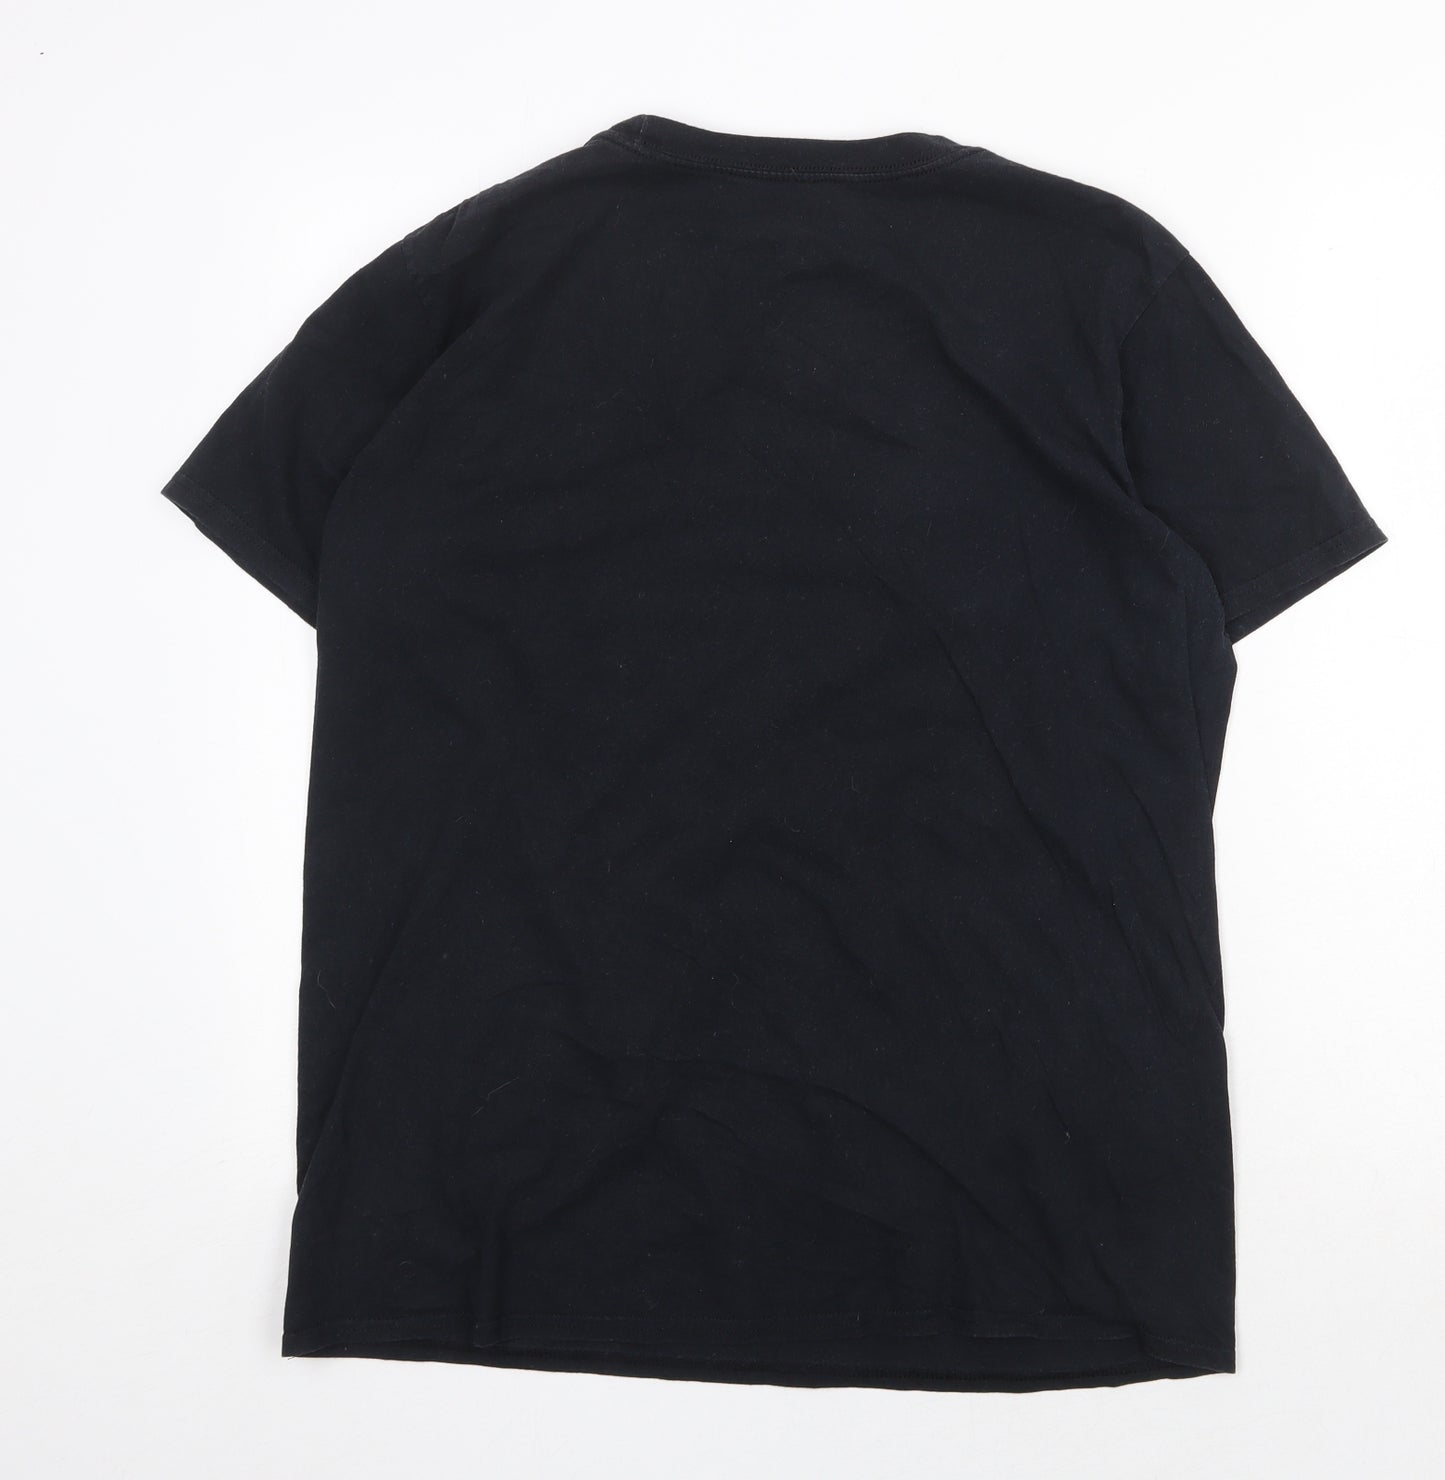 Bolongaro Trevor Mens Black Cotton T-Shirt Size L Round Neck